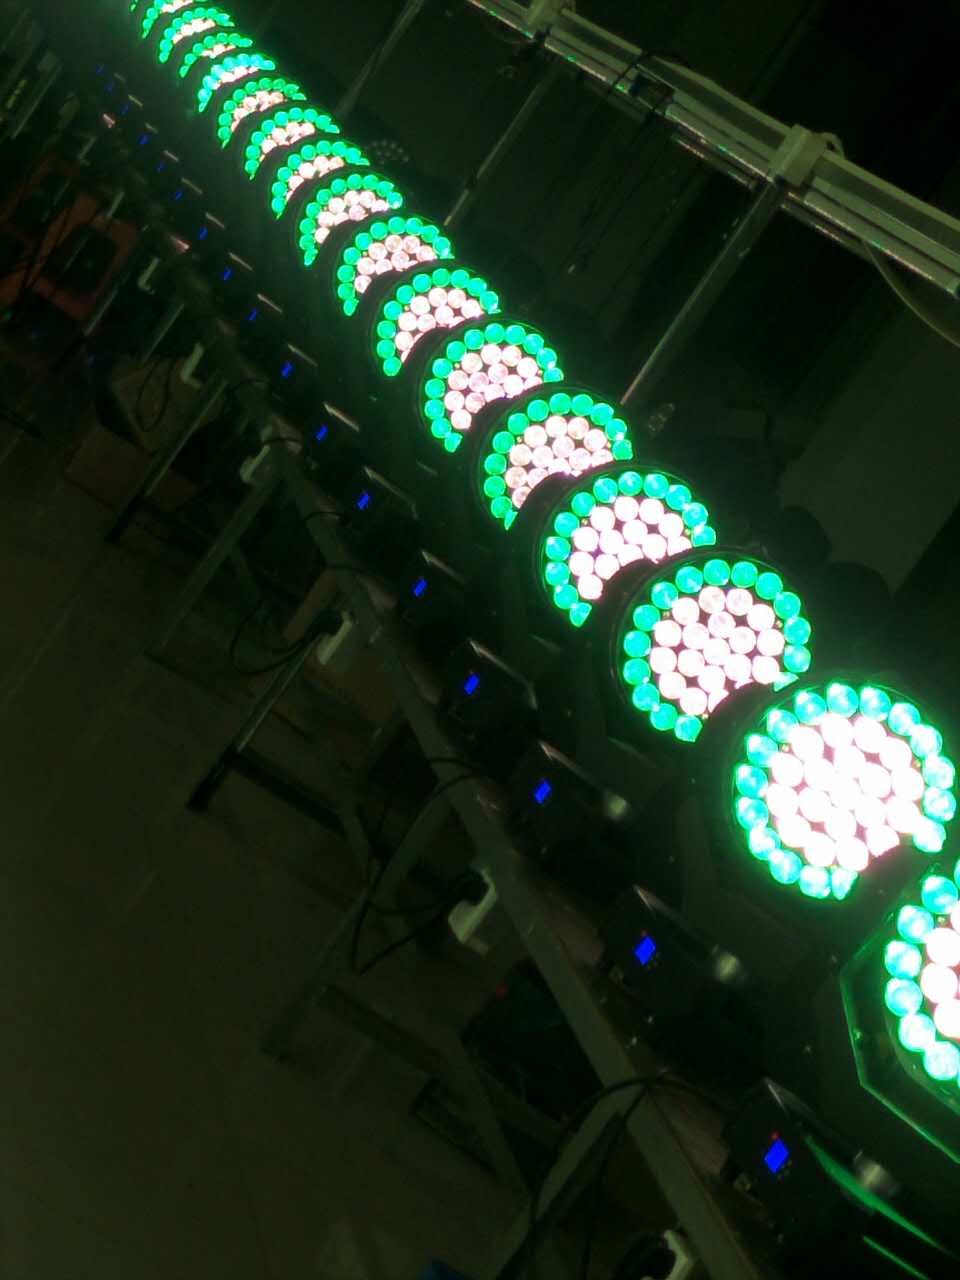 37X15W LED Moving Head Light Zoom MS-3715-7